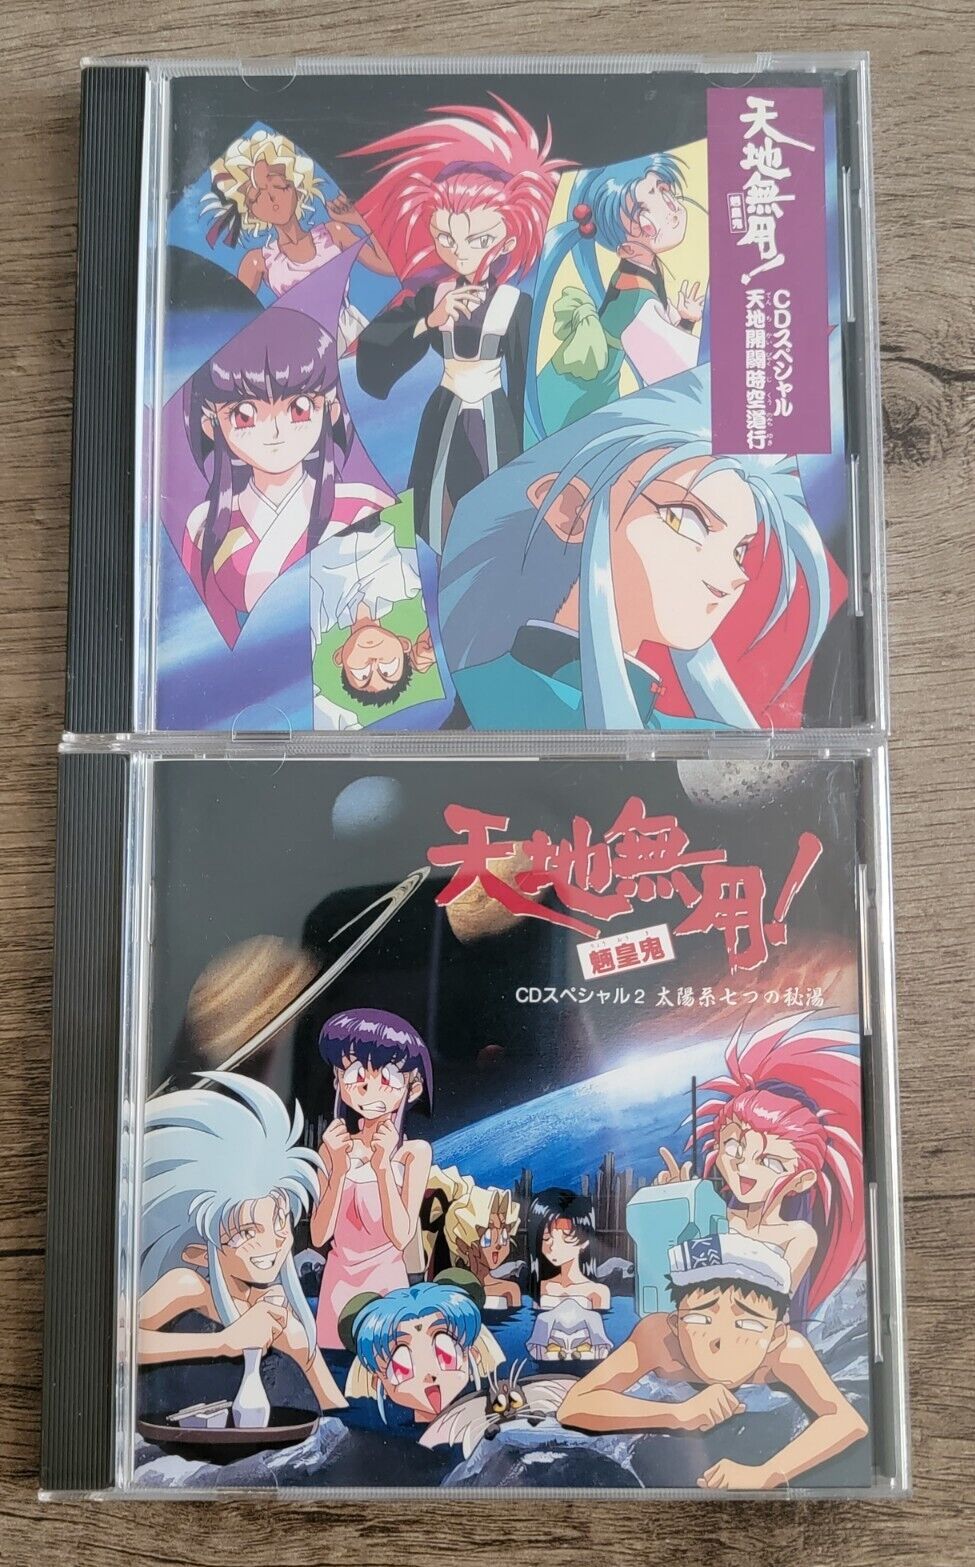 Tenchi Muyo Ryo Ohki Special 1 & 2 CD Anime PICA 1034 / PICA 1018, 1995/96 W/OBI